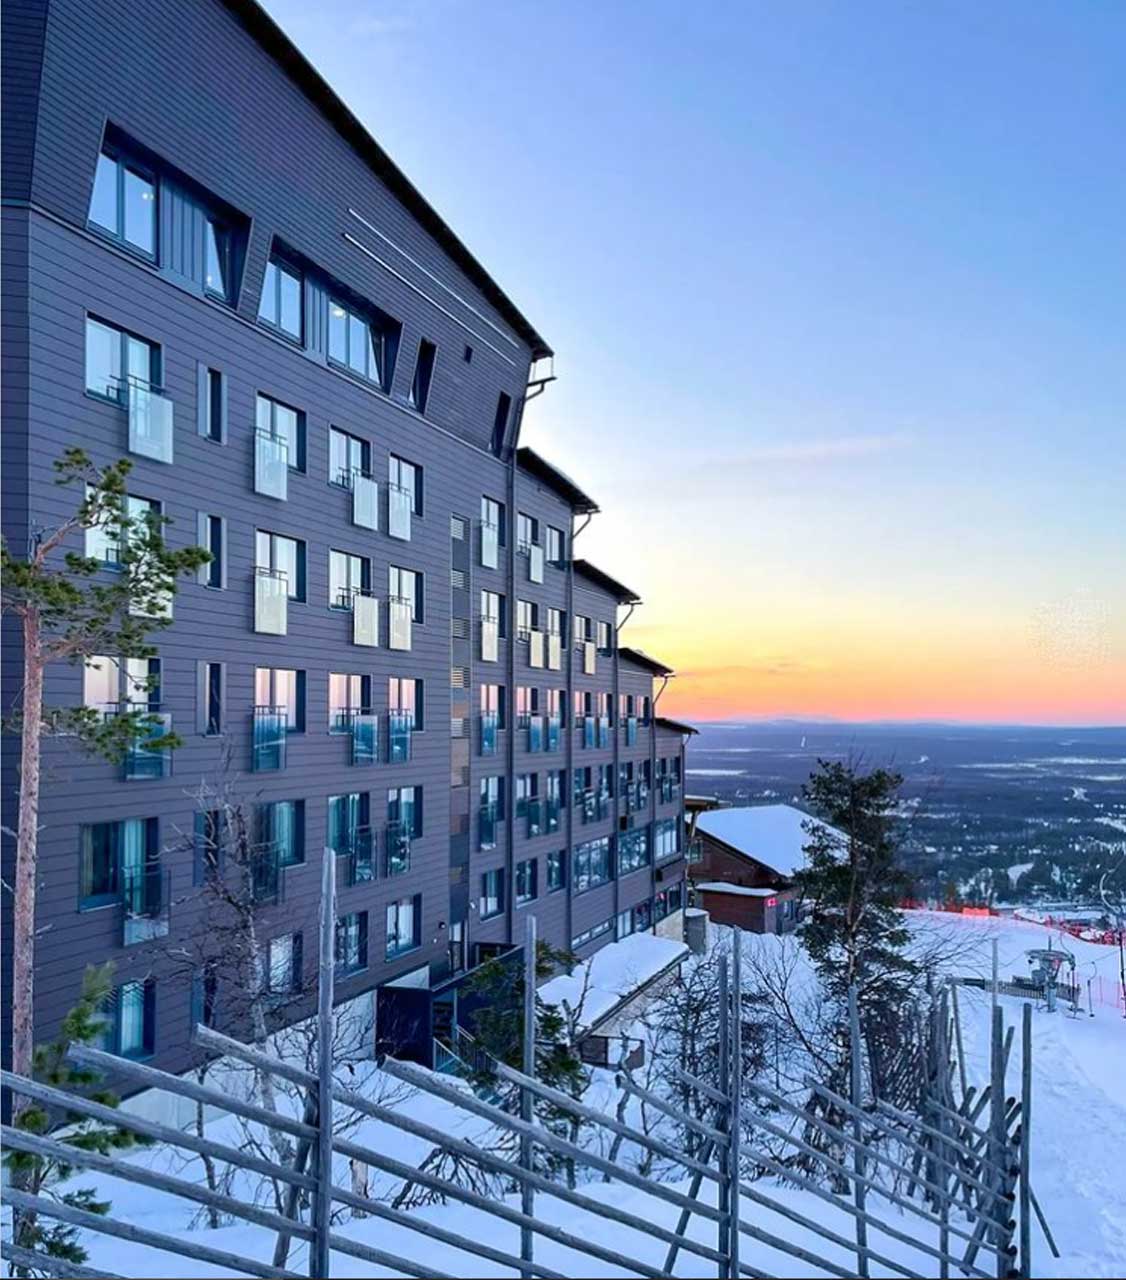 Hotel Levi Panorama på vintern.